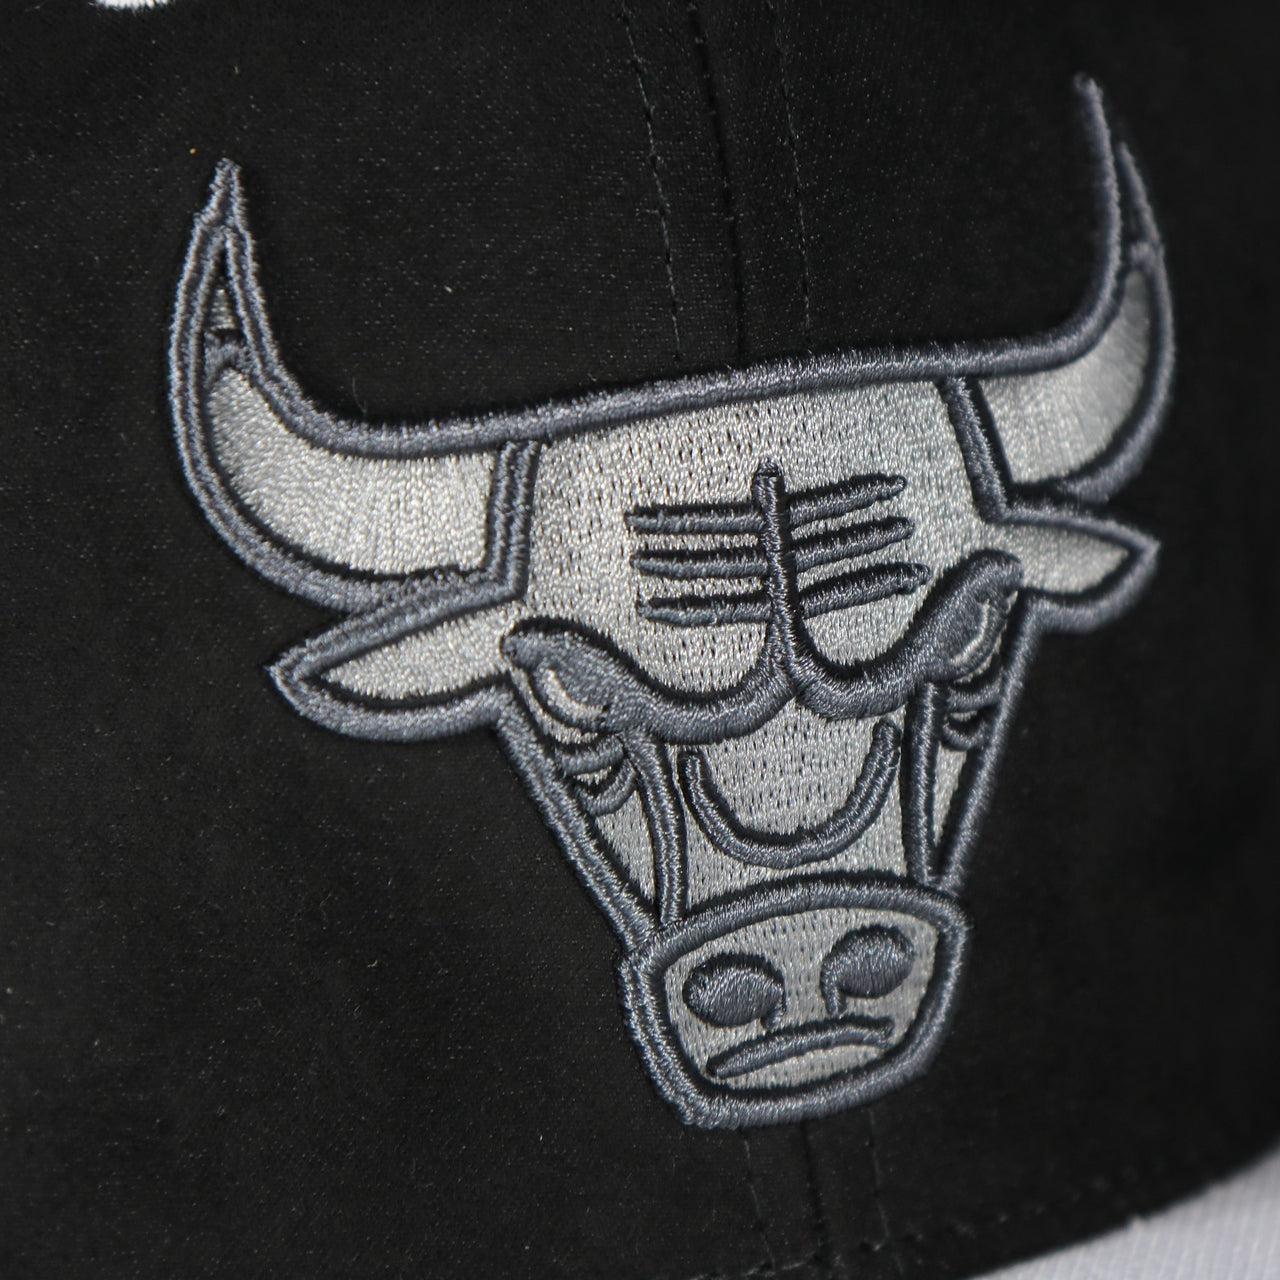 Chicago Bulls Day 5 Sneaker Hookup Grey bottom Two-Tone | Black/White Snapback Hat